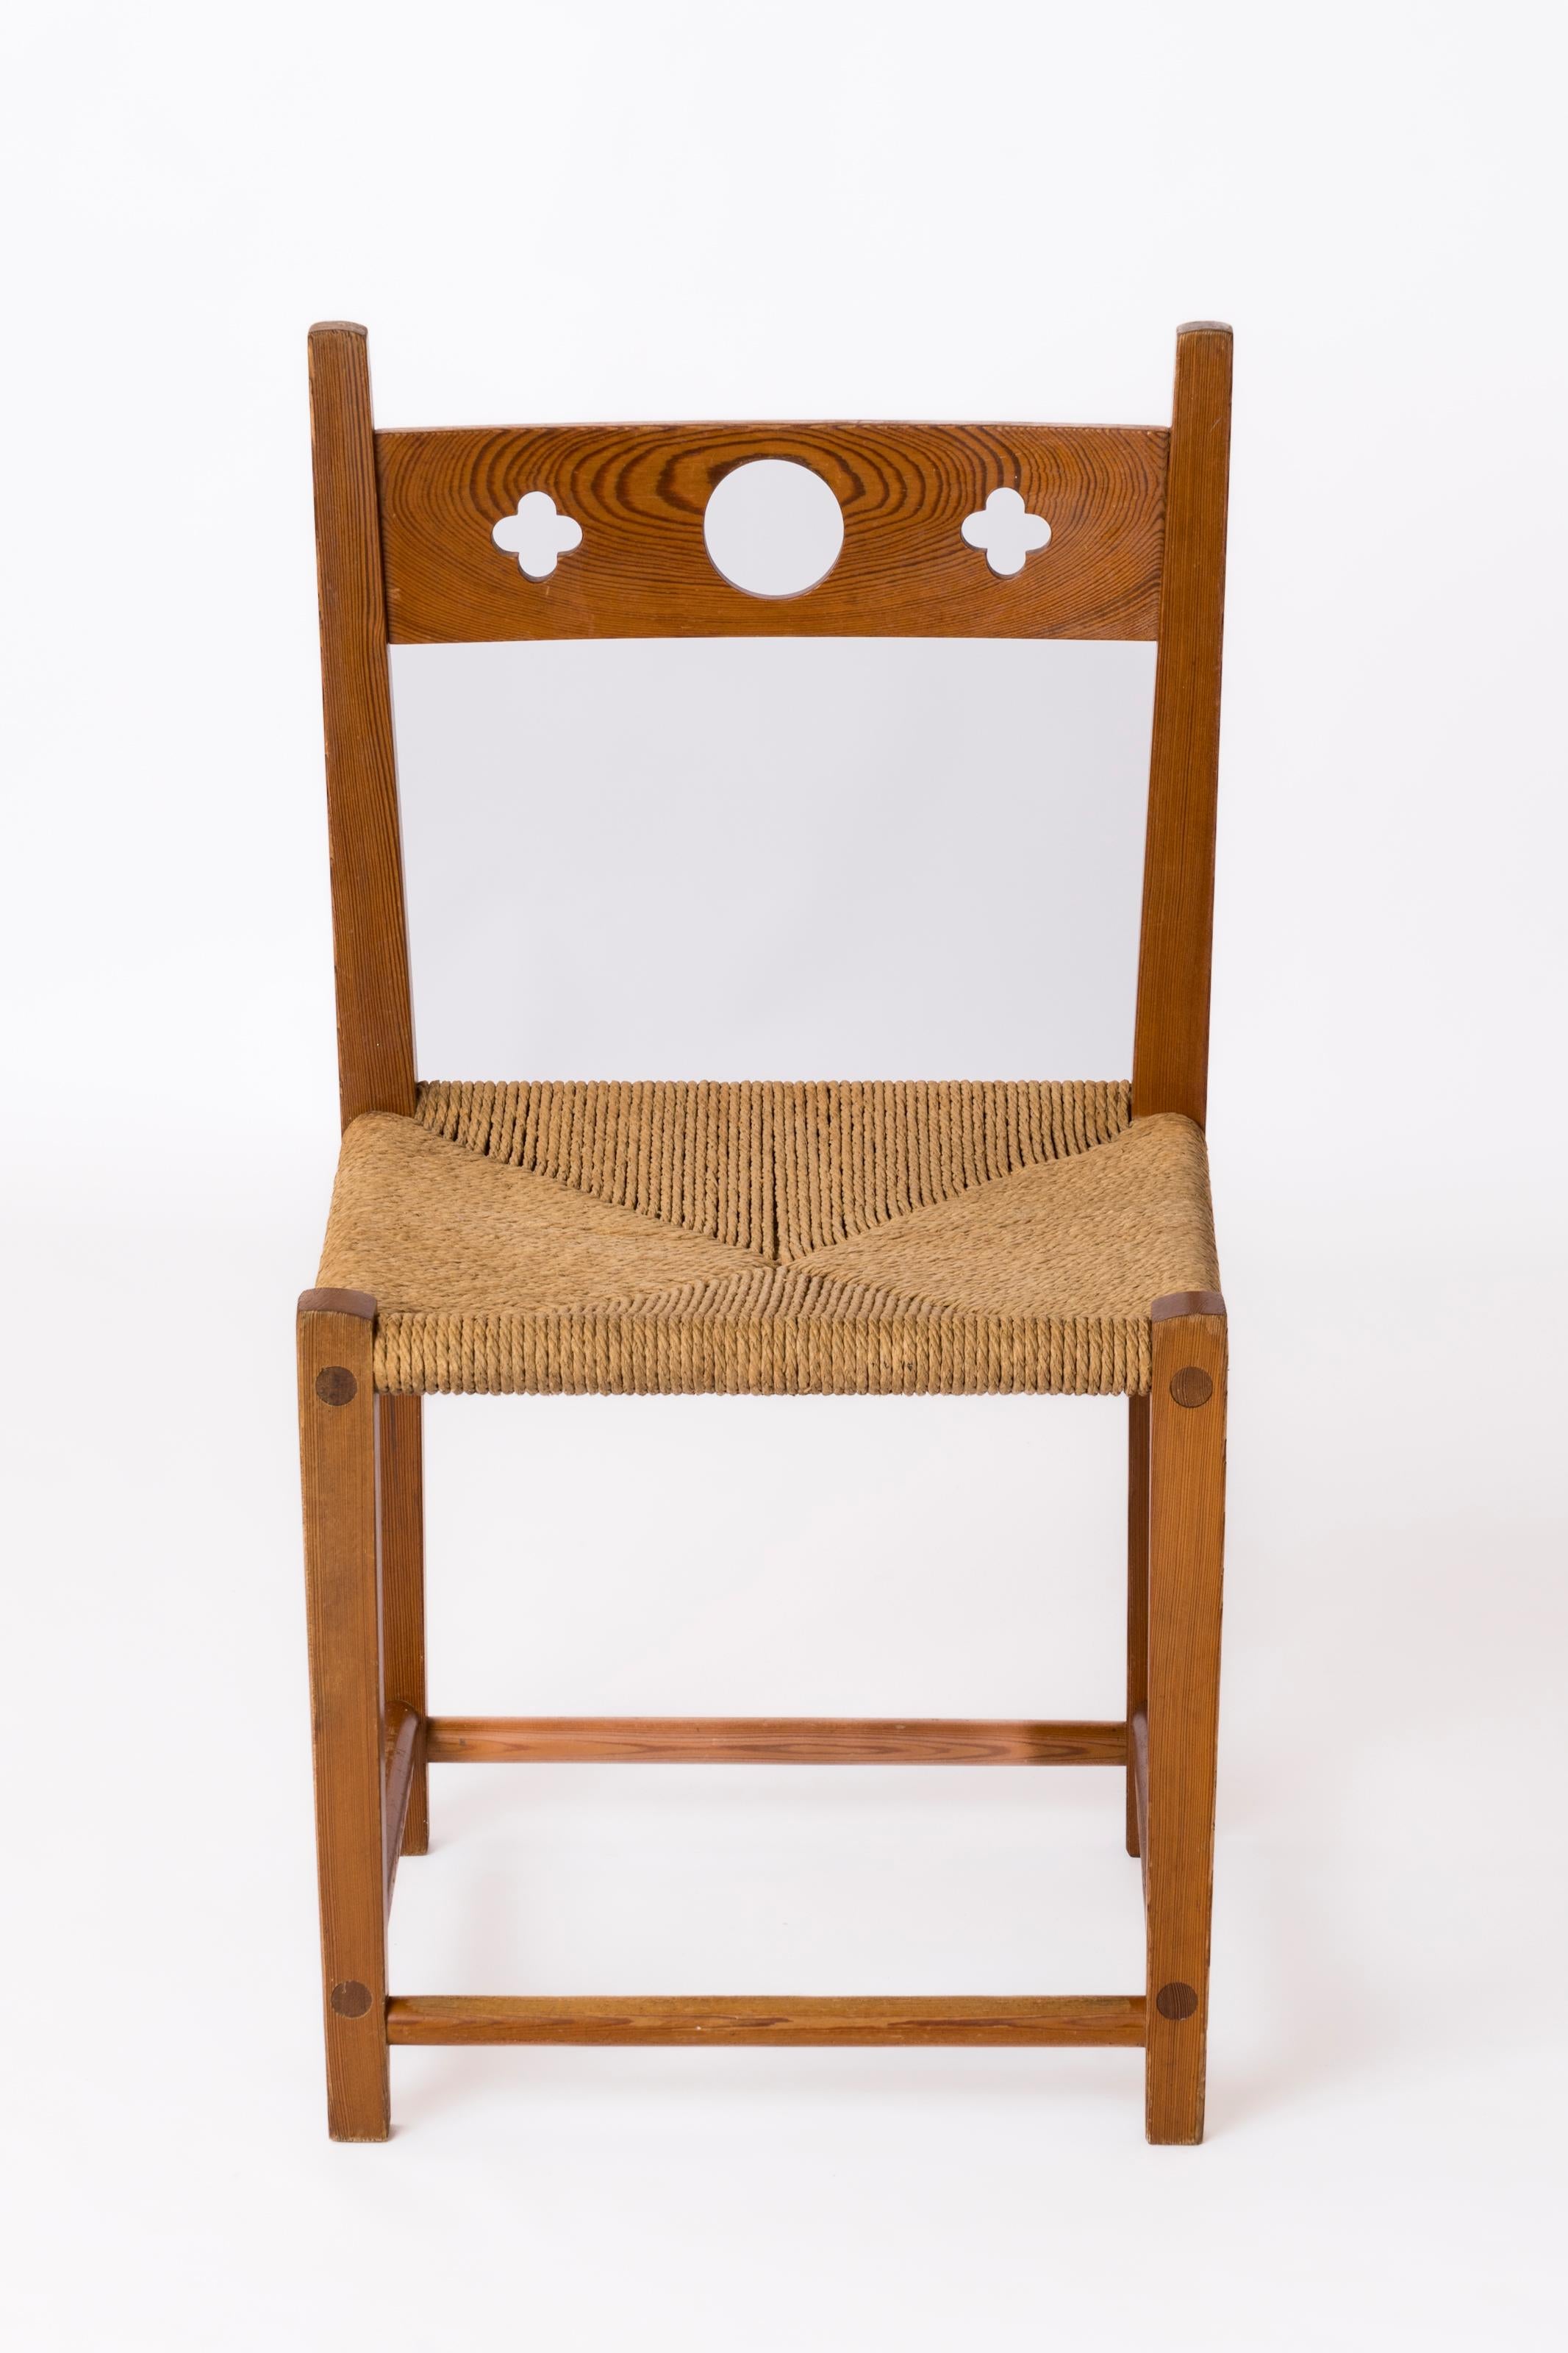 Swedish Single Solid Pinewood and Rush Chair att. Gilbert Marklund - Sweden 1970's